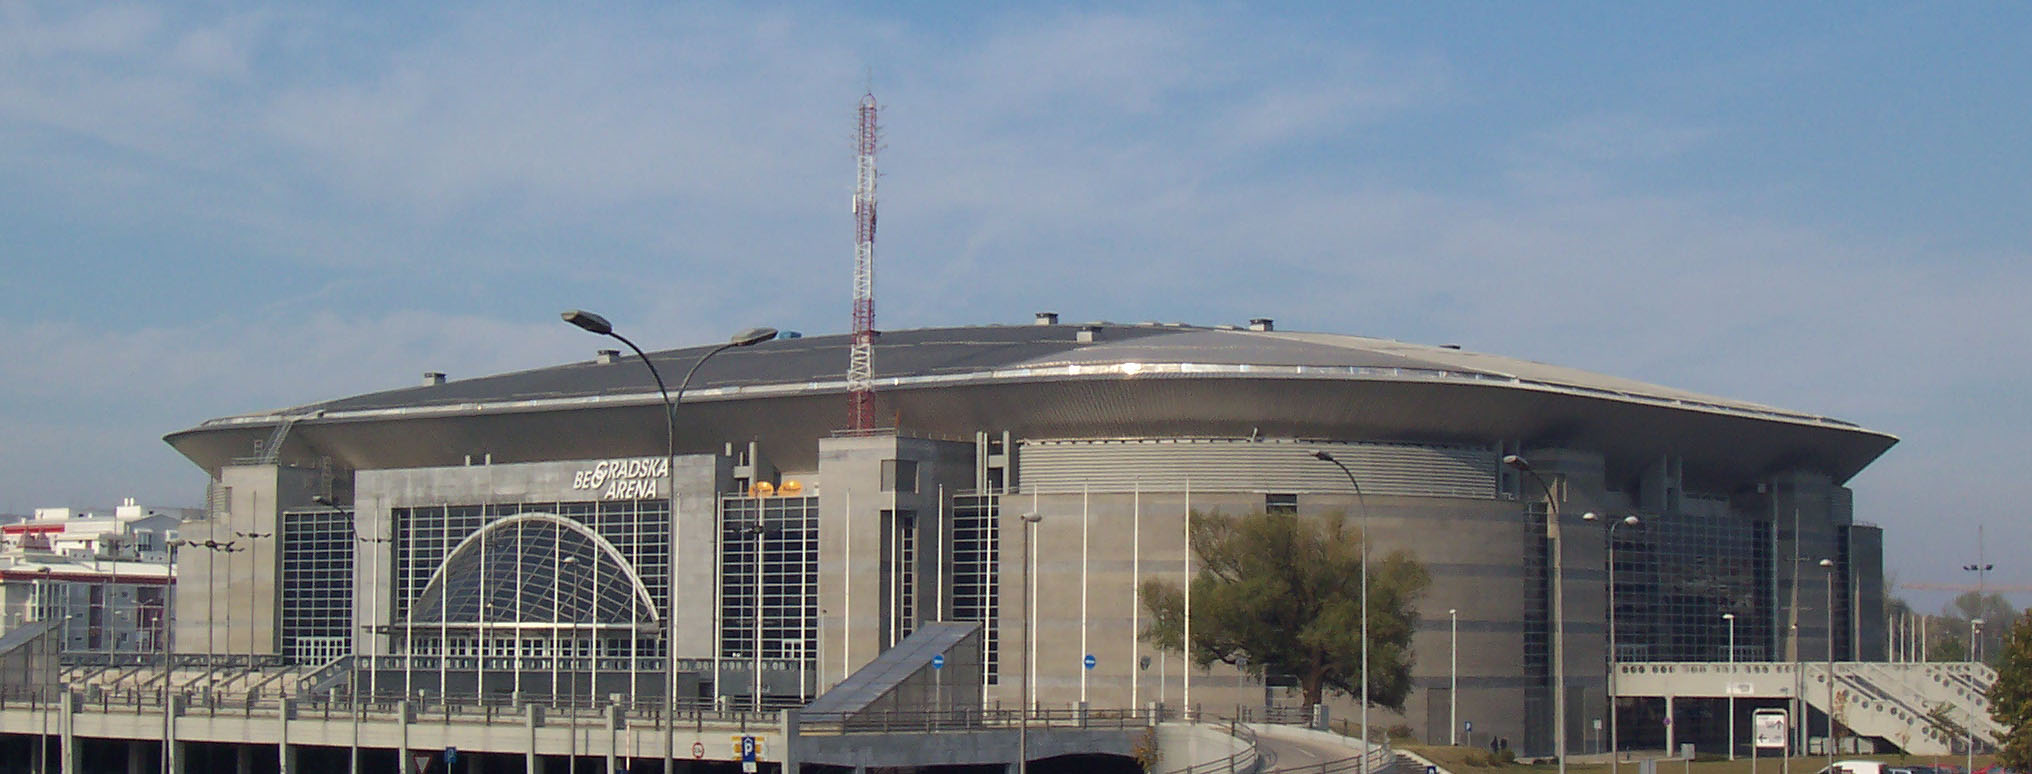 2008: Belgrad Arena, Sırbistan Kapasite: 20000 Açılış: 2004